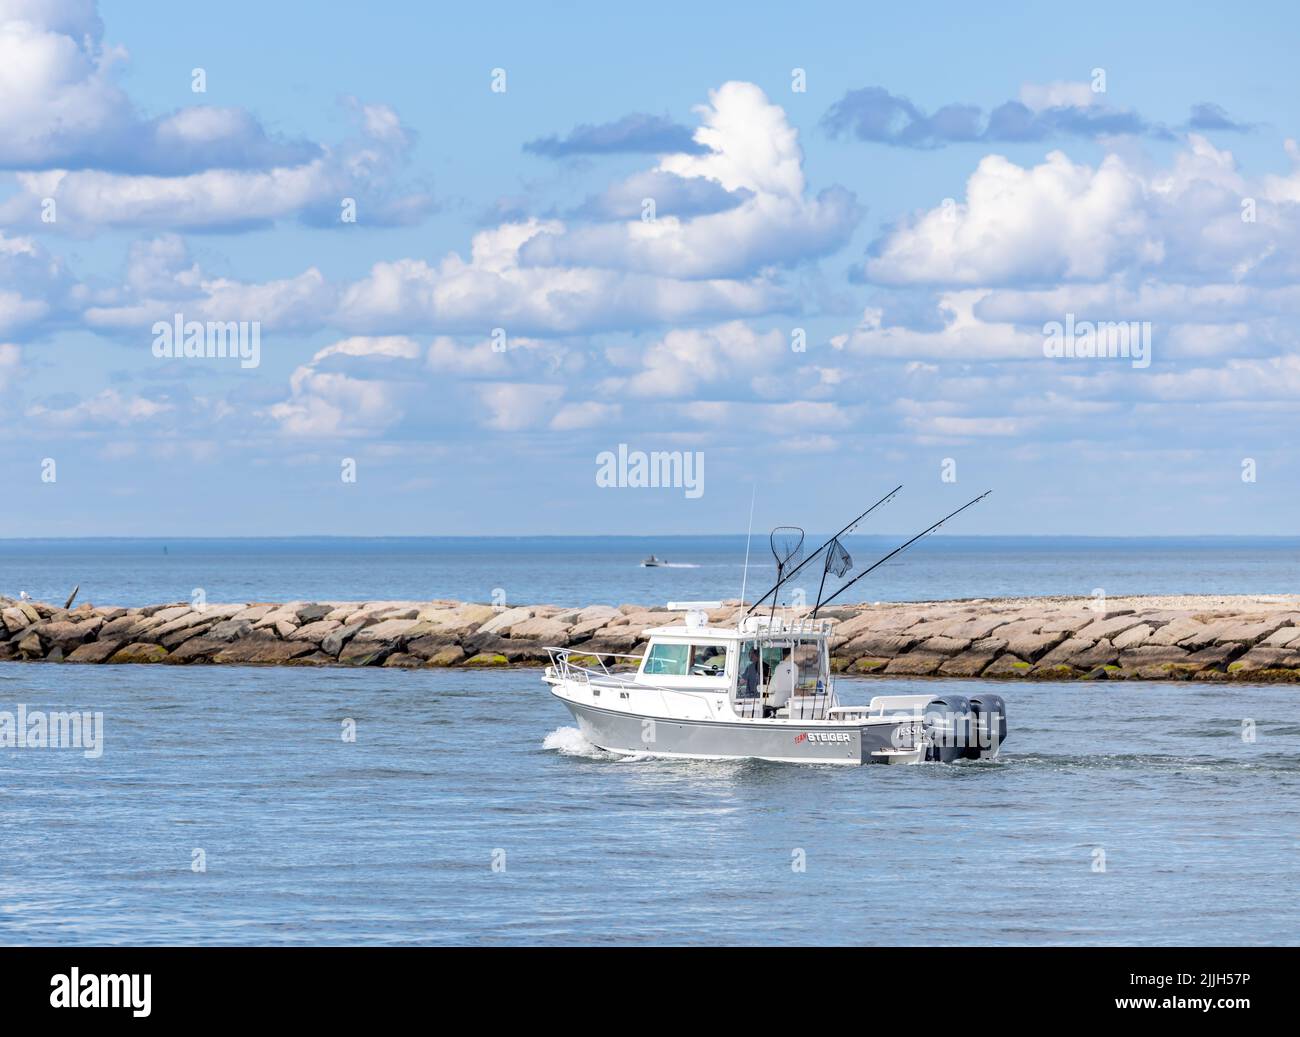 Barco de pesca, Jessica salió del puerto de Montauk Foto de stock